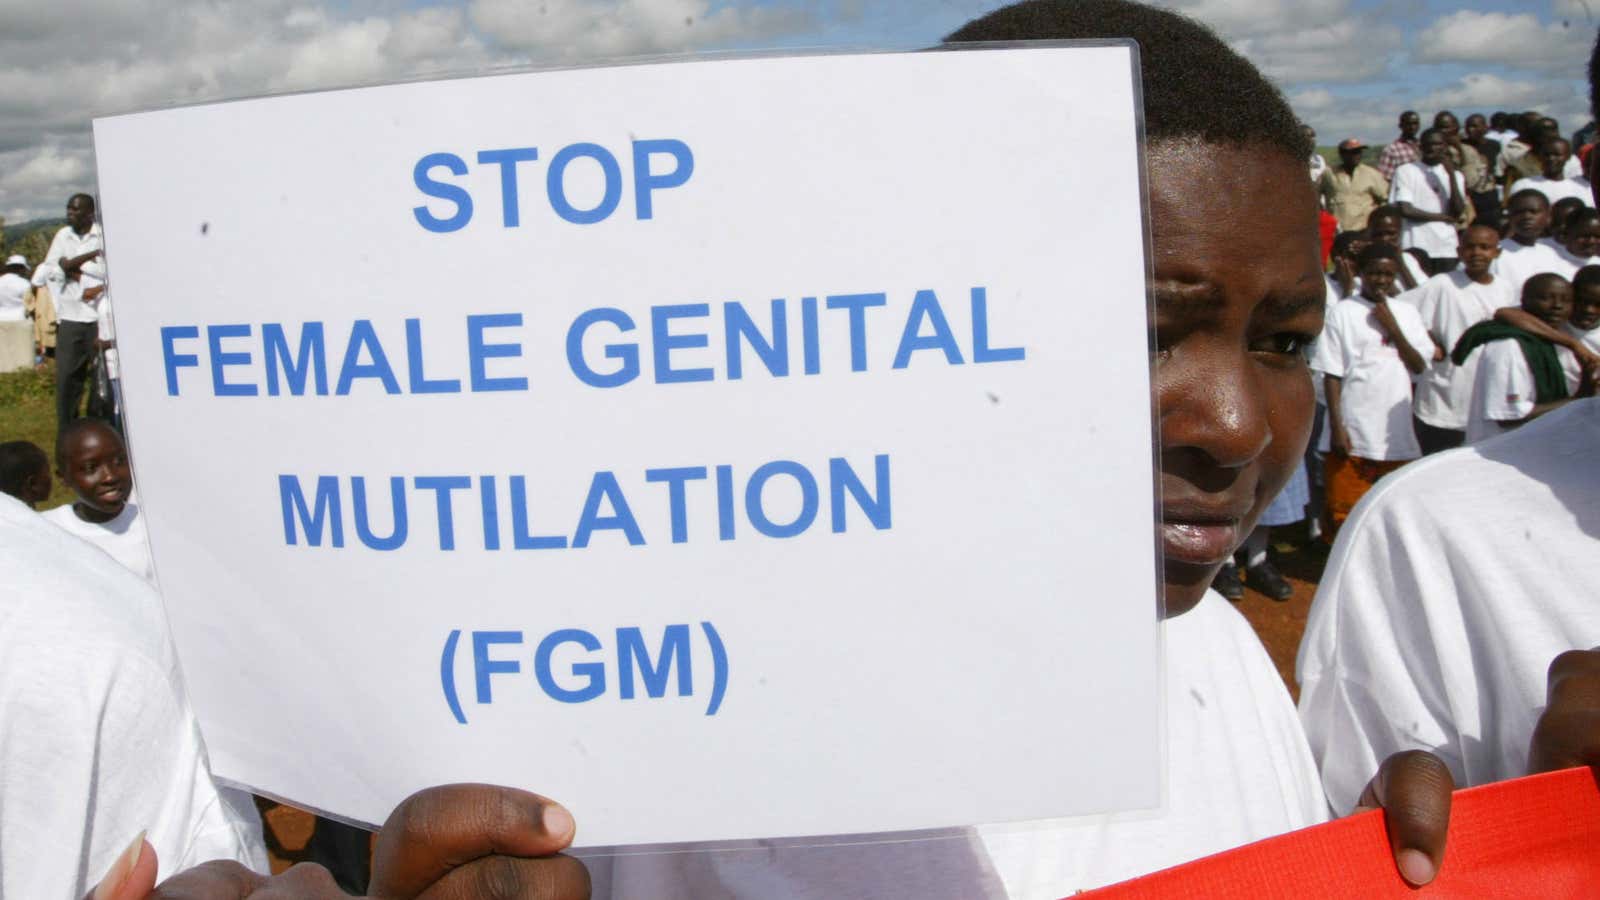 A US judge says Congress can’t ban female genital mutilation